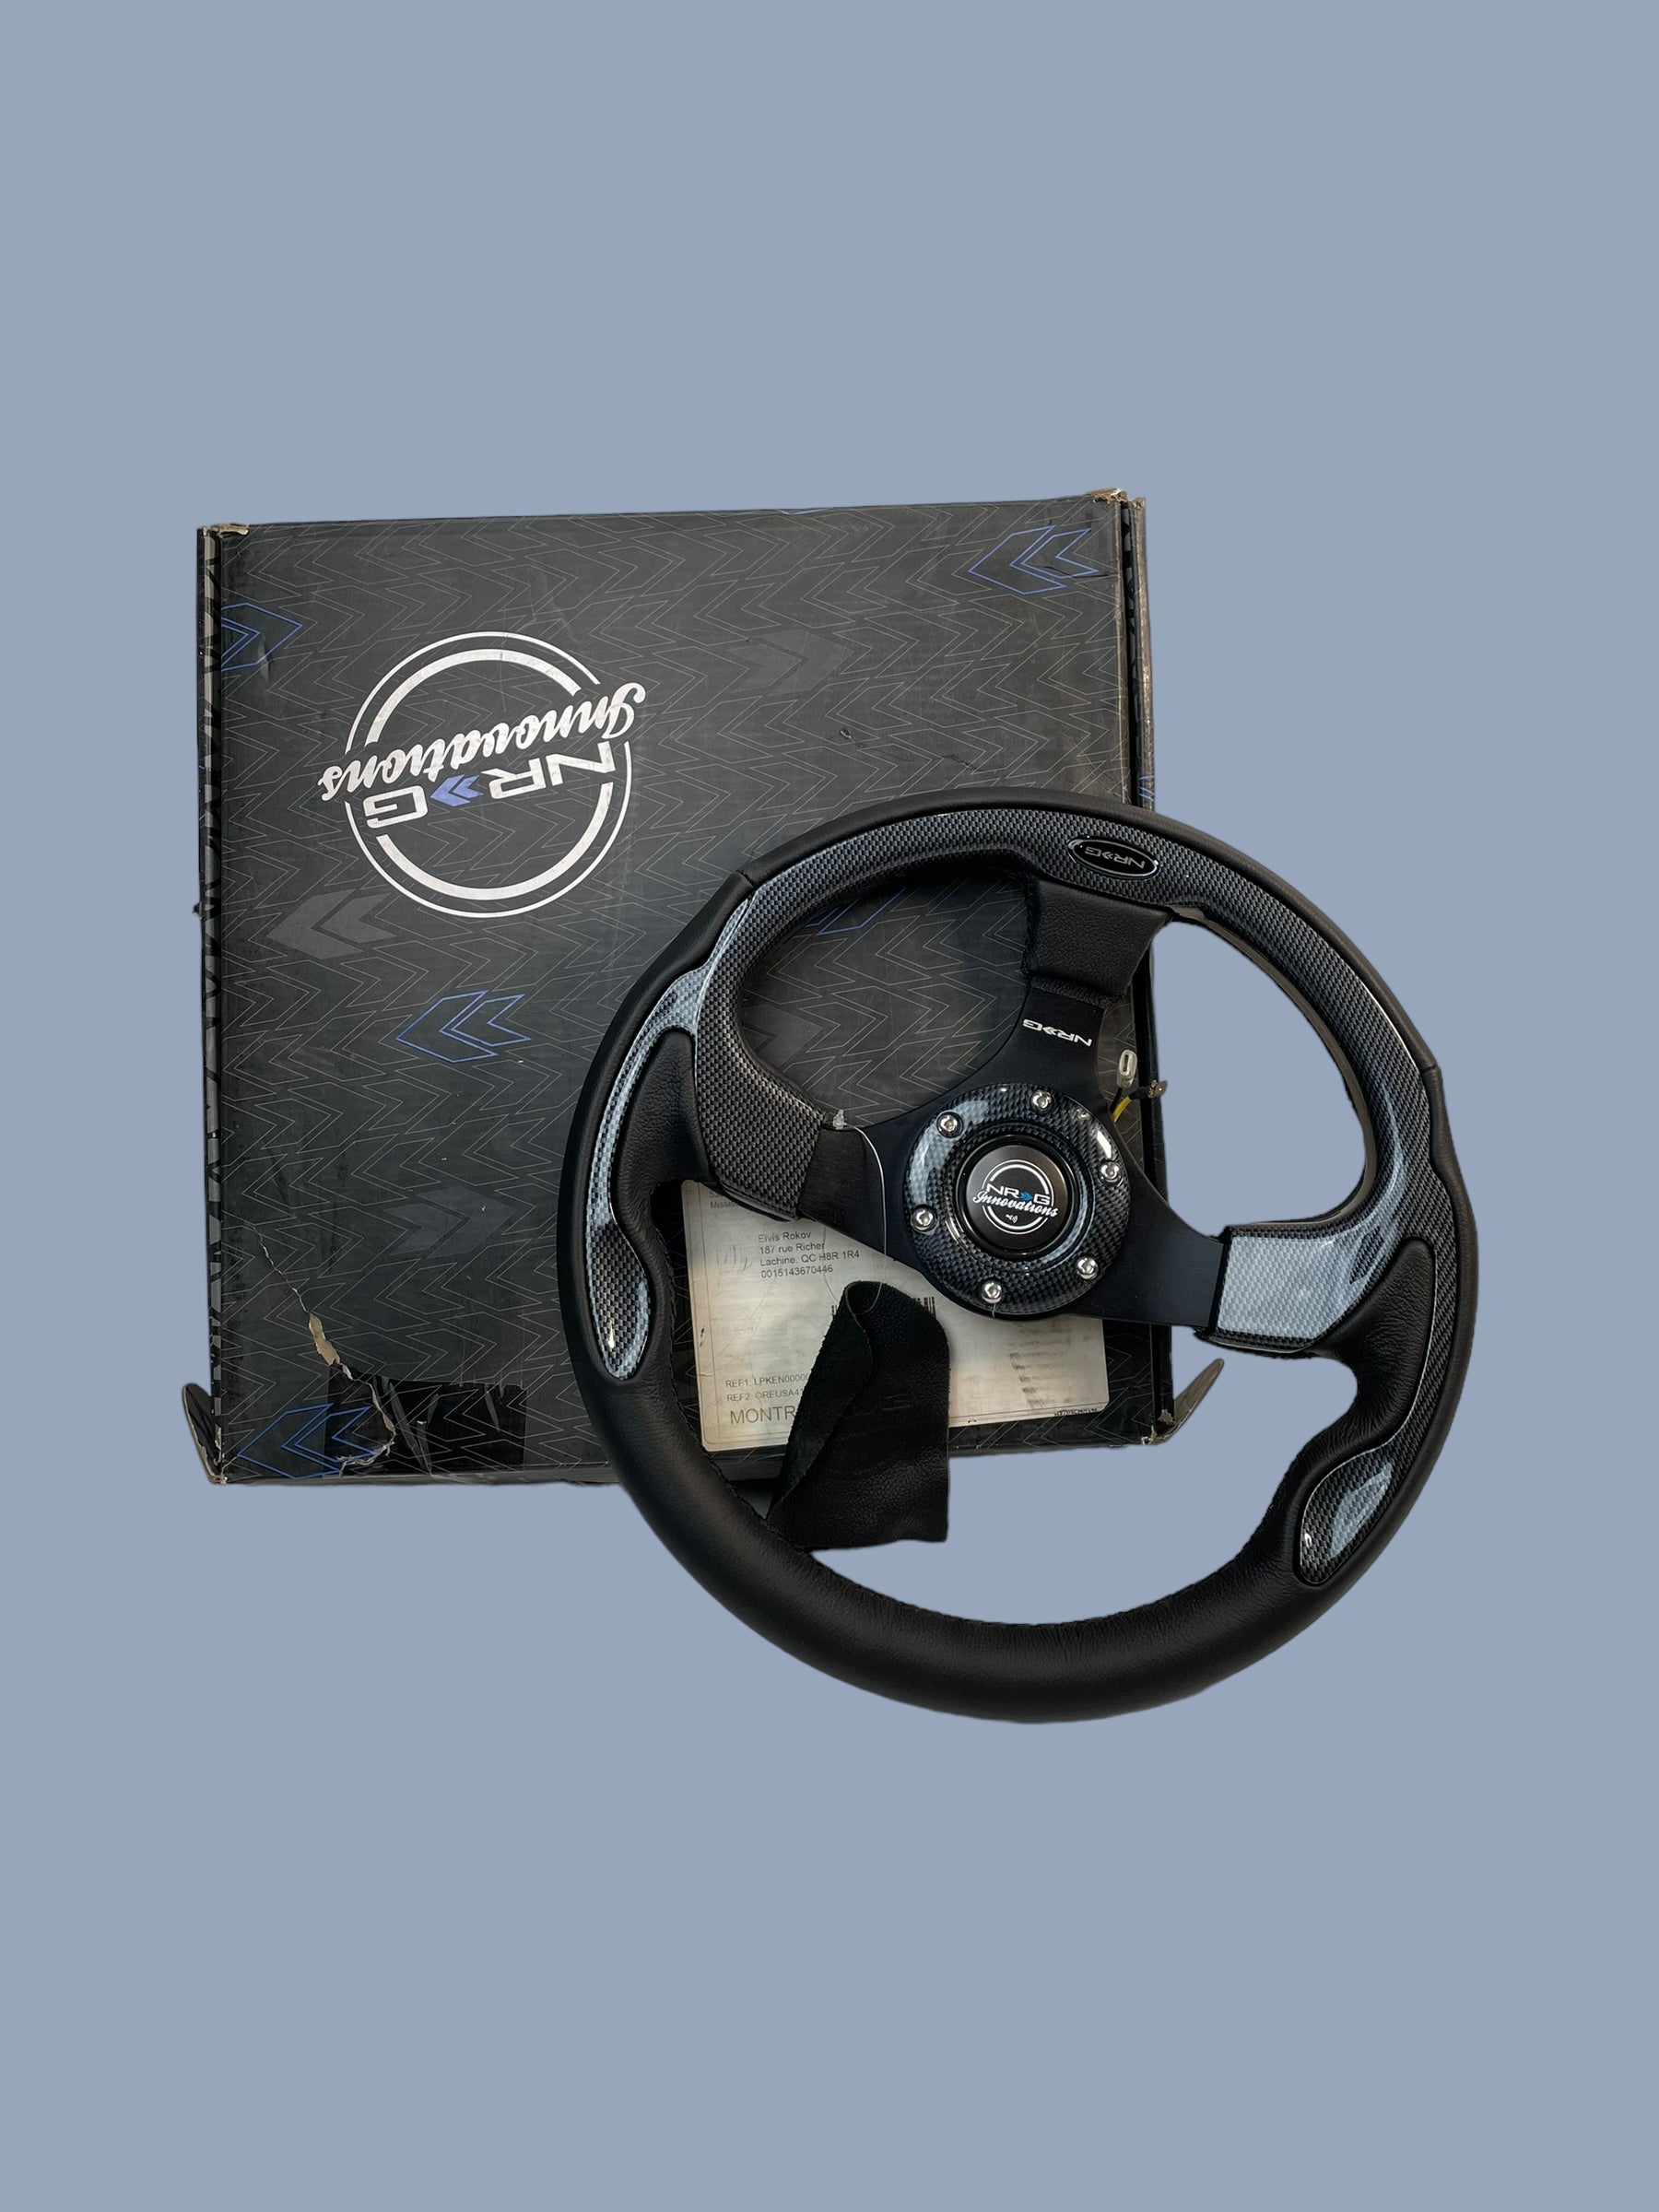 NRG Innovations Steering Wheel ST-001CFL